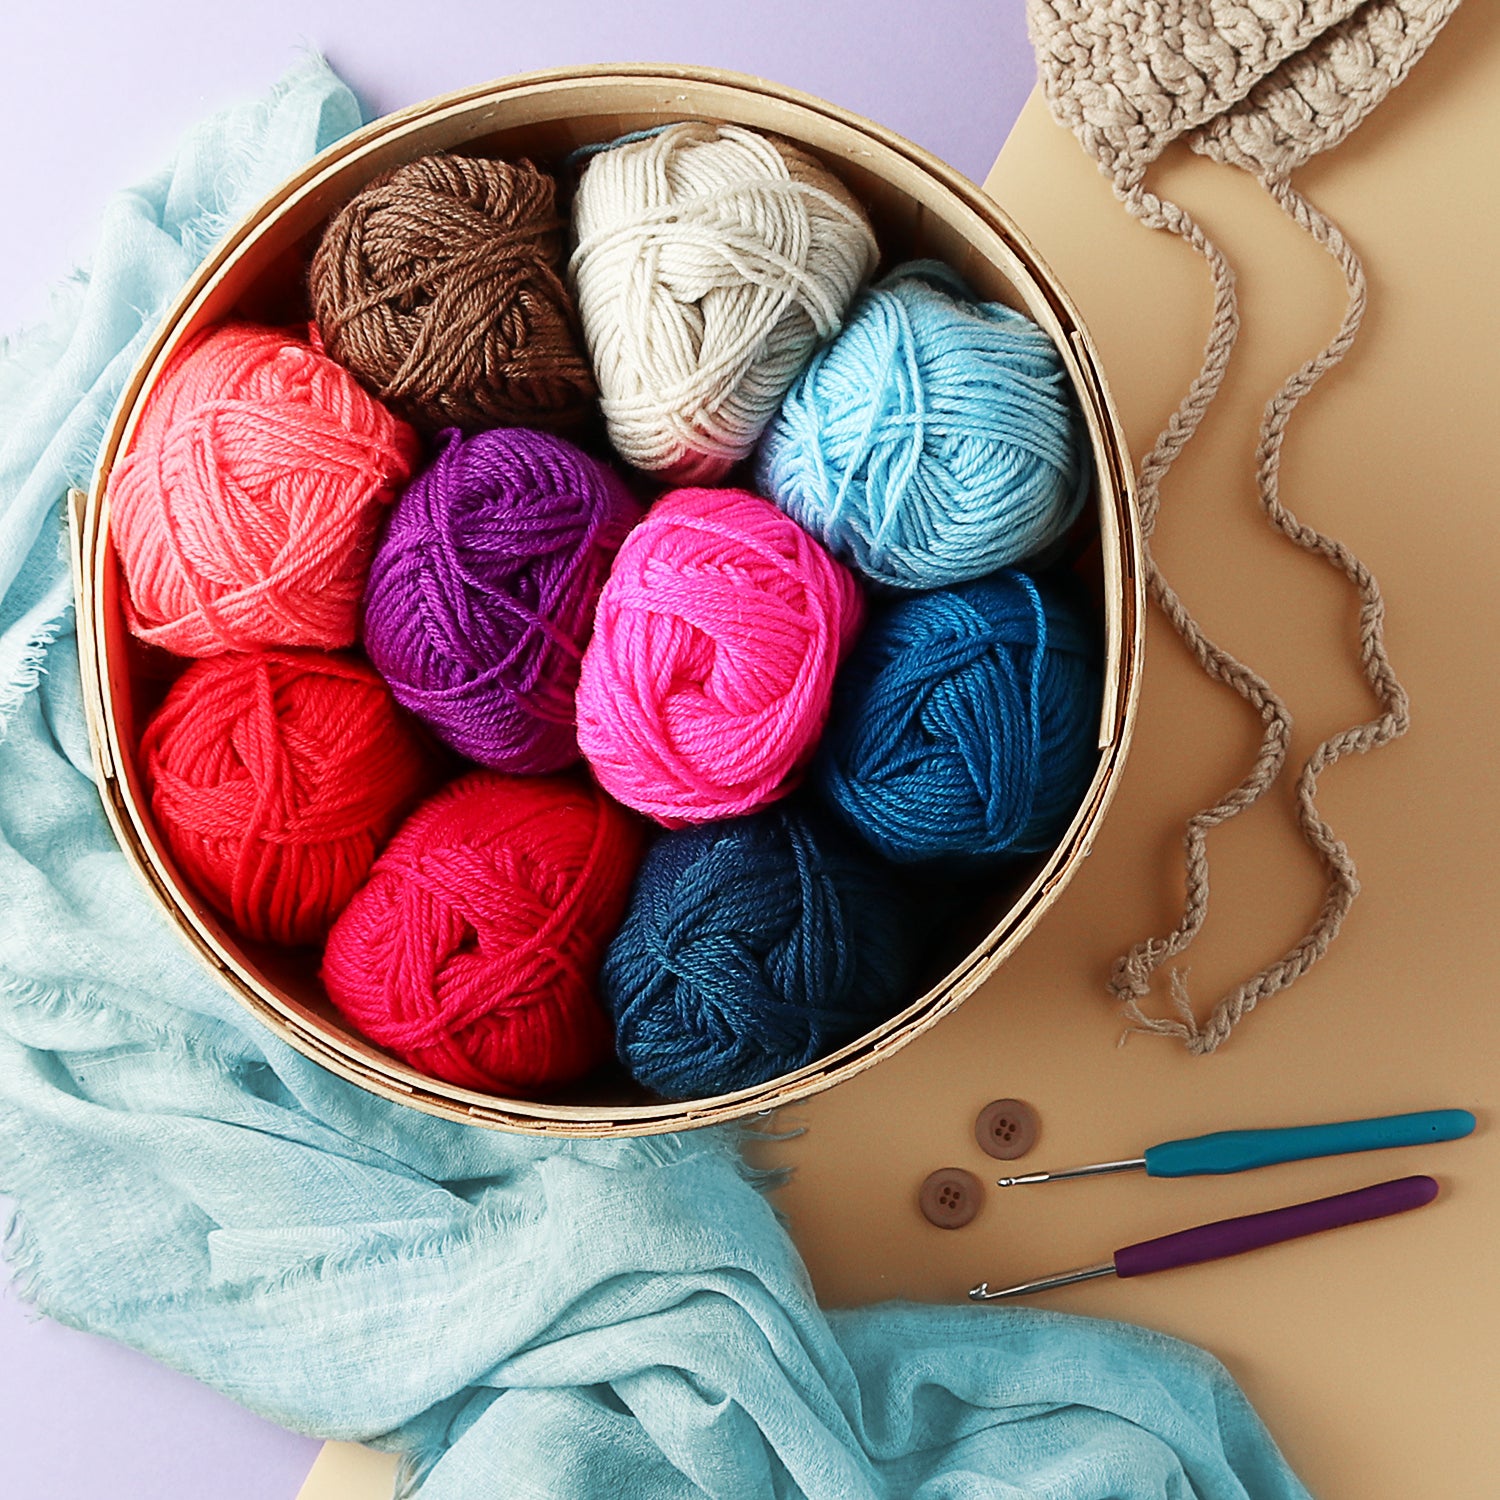 JumblCrafts 24 Piece Yarn Crochet Kit & Knitting Set w/Crochet Accessories  - Multi